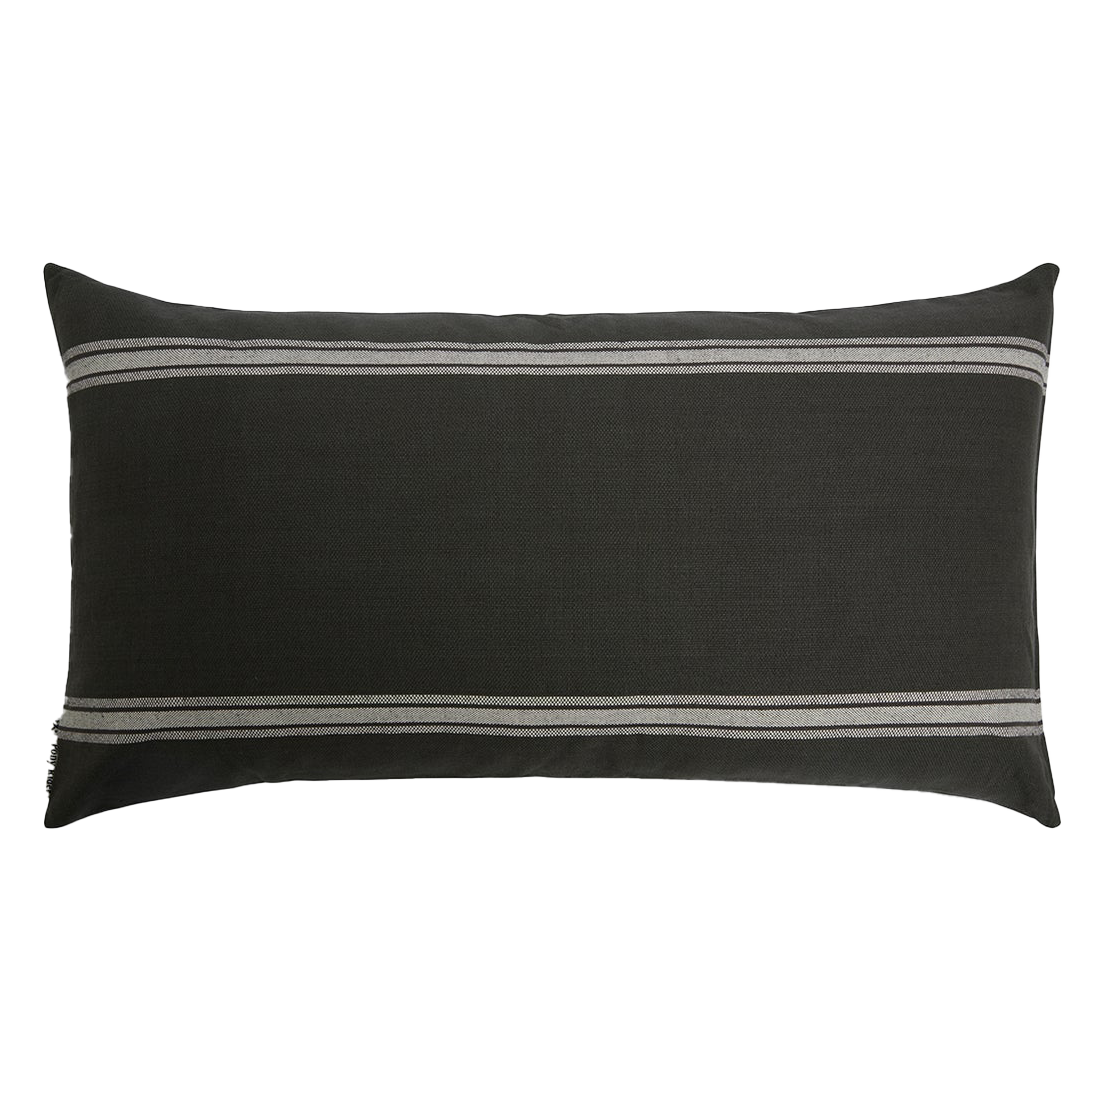 Pony Rider admiral cushion cover 85 x 45cm duffle green